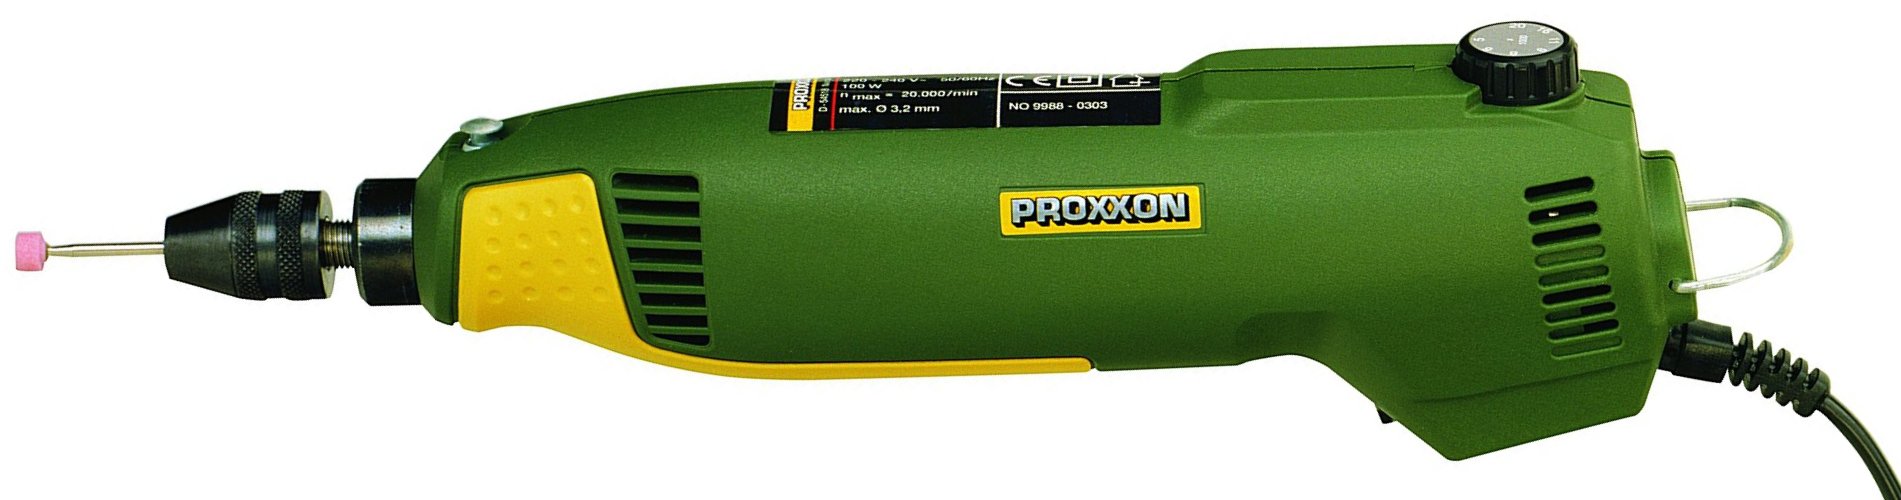 Proxxon FBS240/E